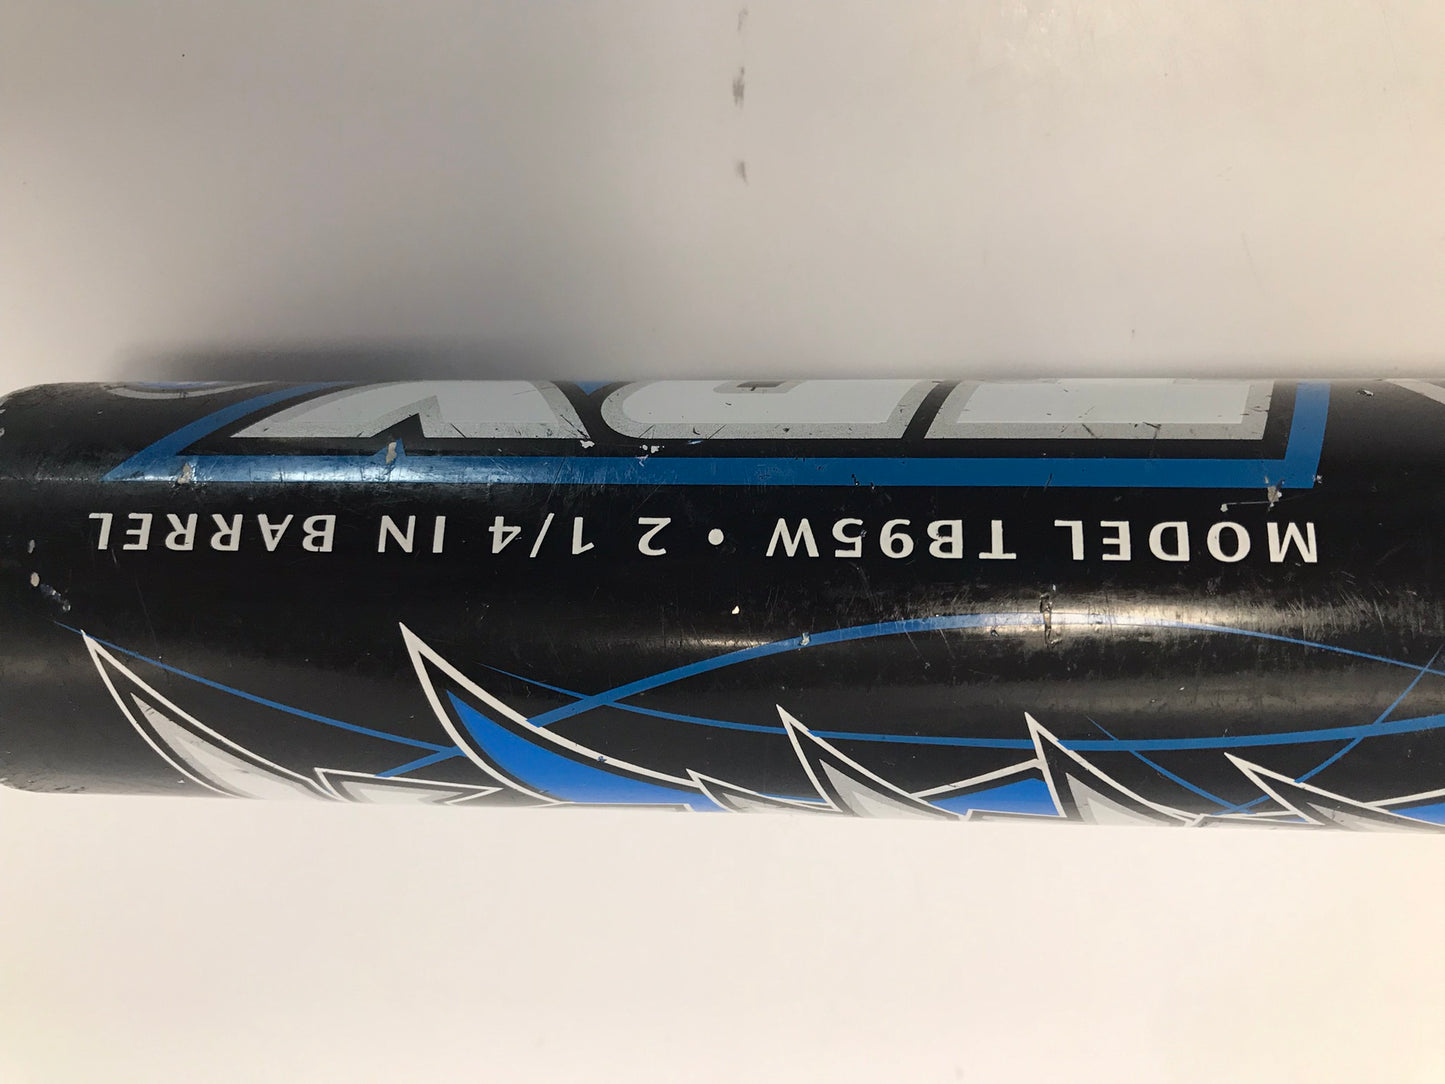 Baseball BAt 26 Inches 1603 Louisville Slugger Warrior Black Blue White